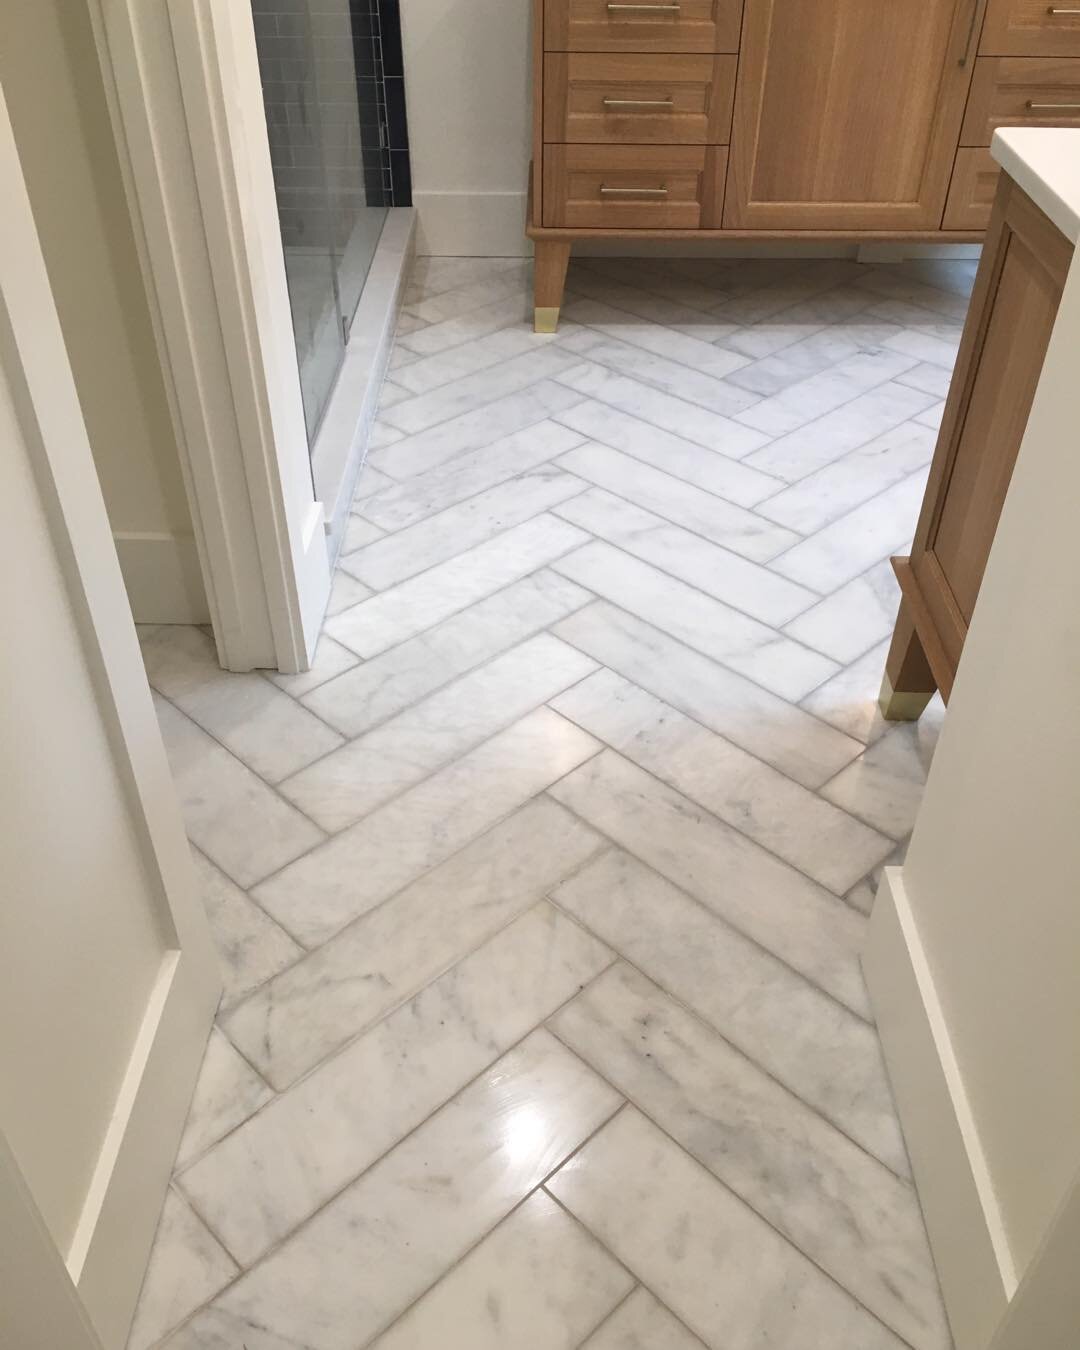 herringbone pattern marble floor
Call us (904) 613-7911- RR SPEC FLOORING  #bathrooms #kitcheb #tile #pontevedra #pontevedrabeach #florida #jacksonville  #jax #jaguars #atlanticbeach